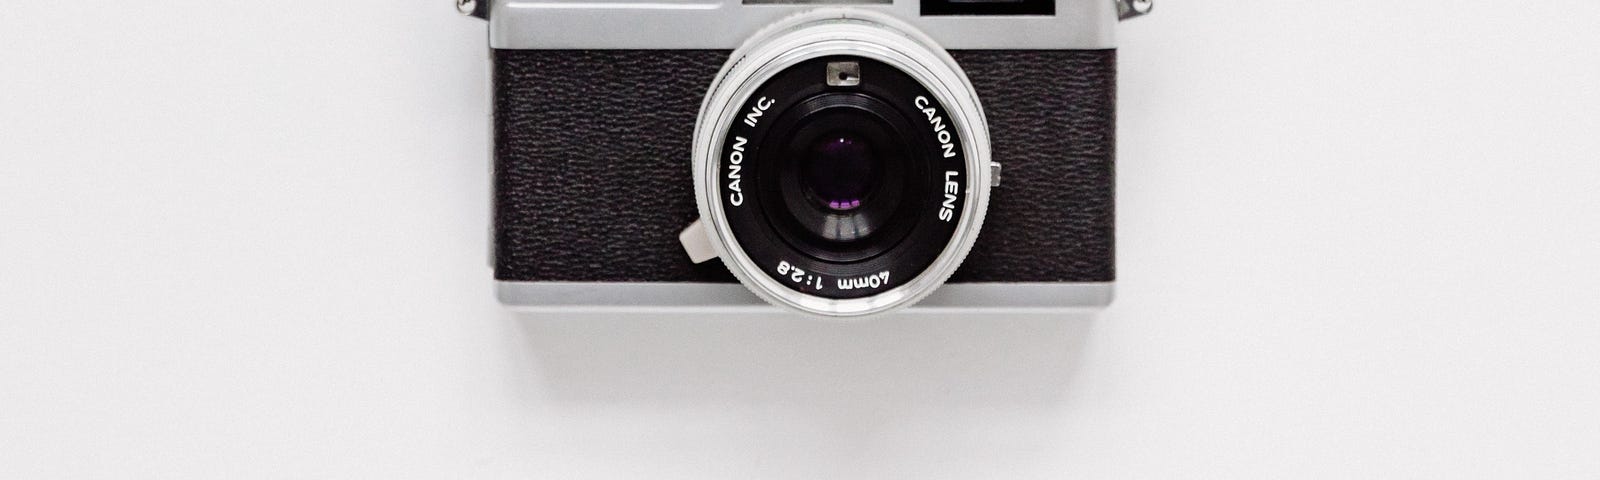 A Canon vintage camera.